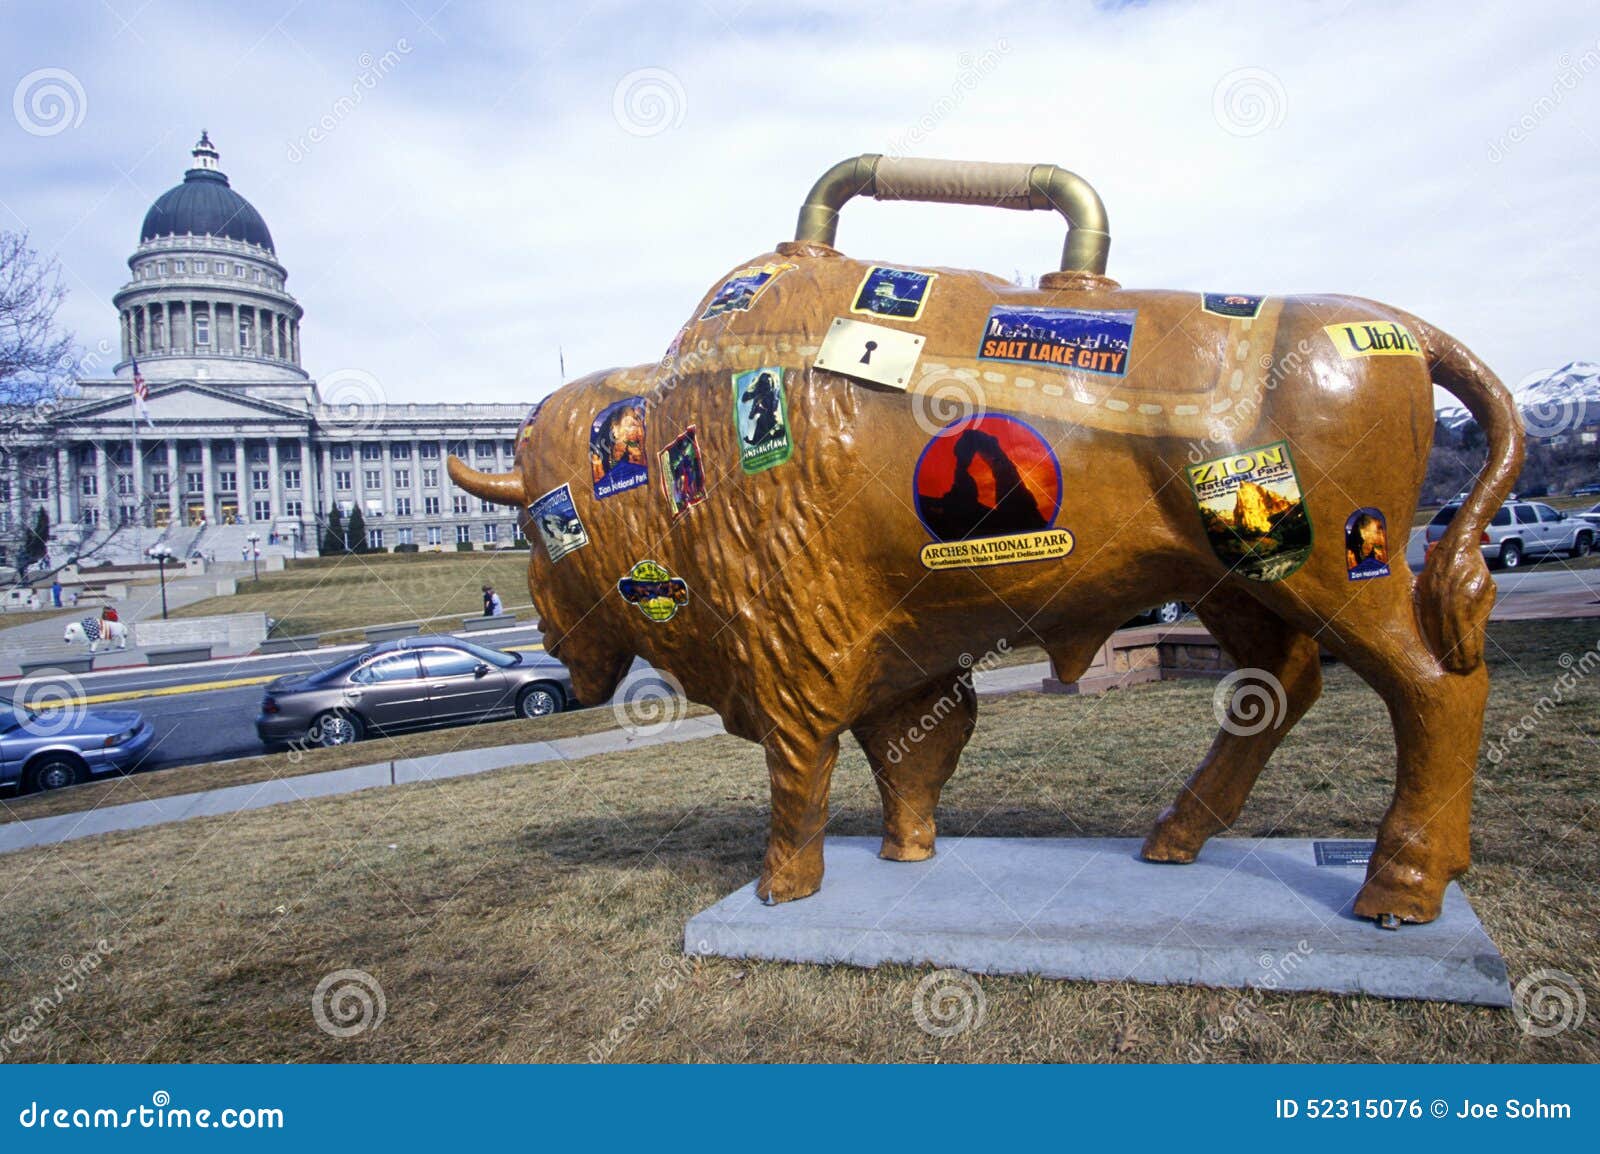 painted-bison-community-art-project-winter-olympics-state-capitol-salt-lake-city-ut-52315076.jpg